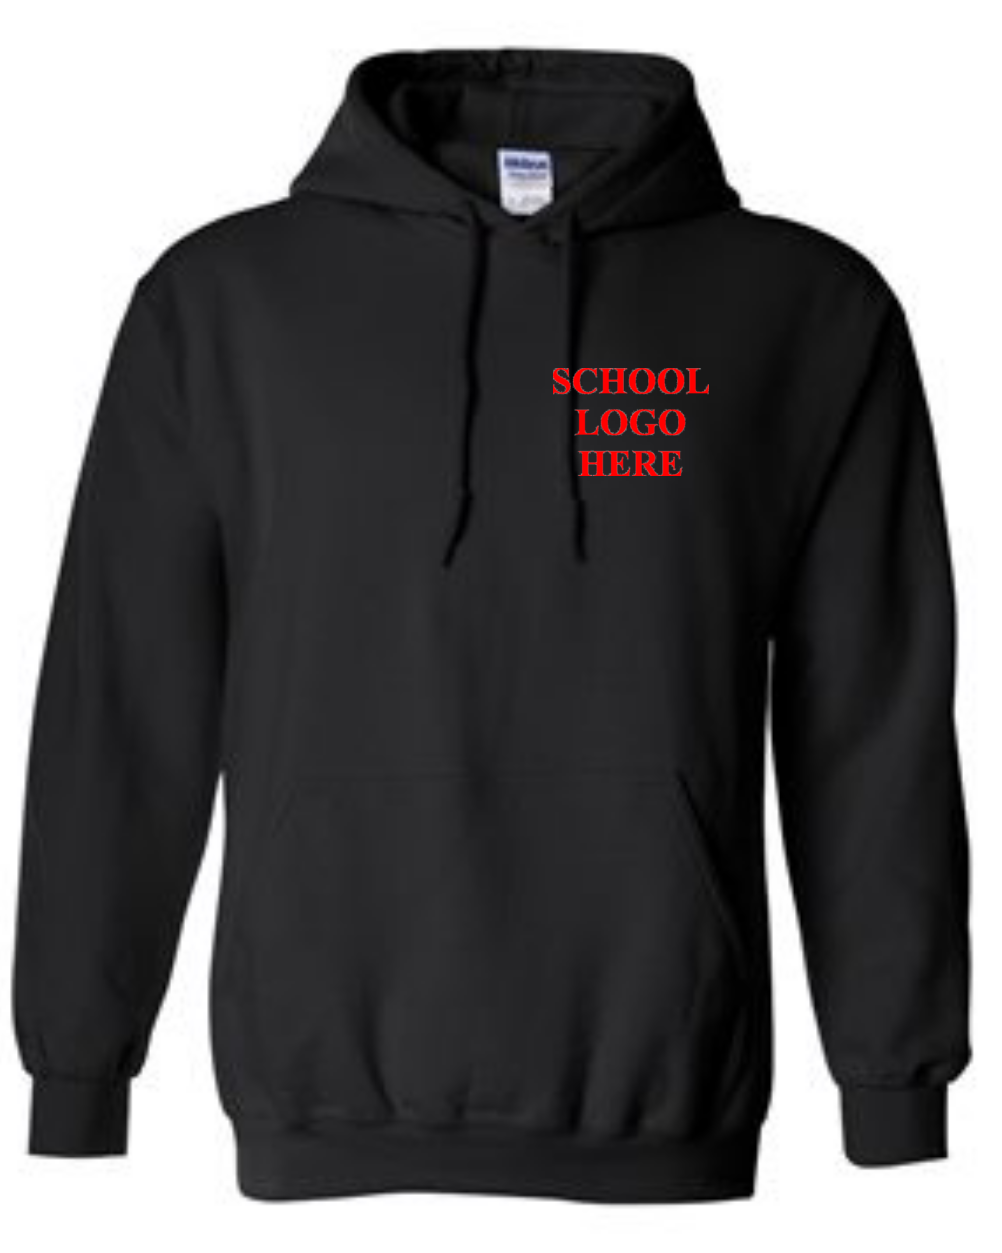 Lemelson STEM Academy School Uniform Black Sweatshirt